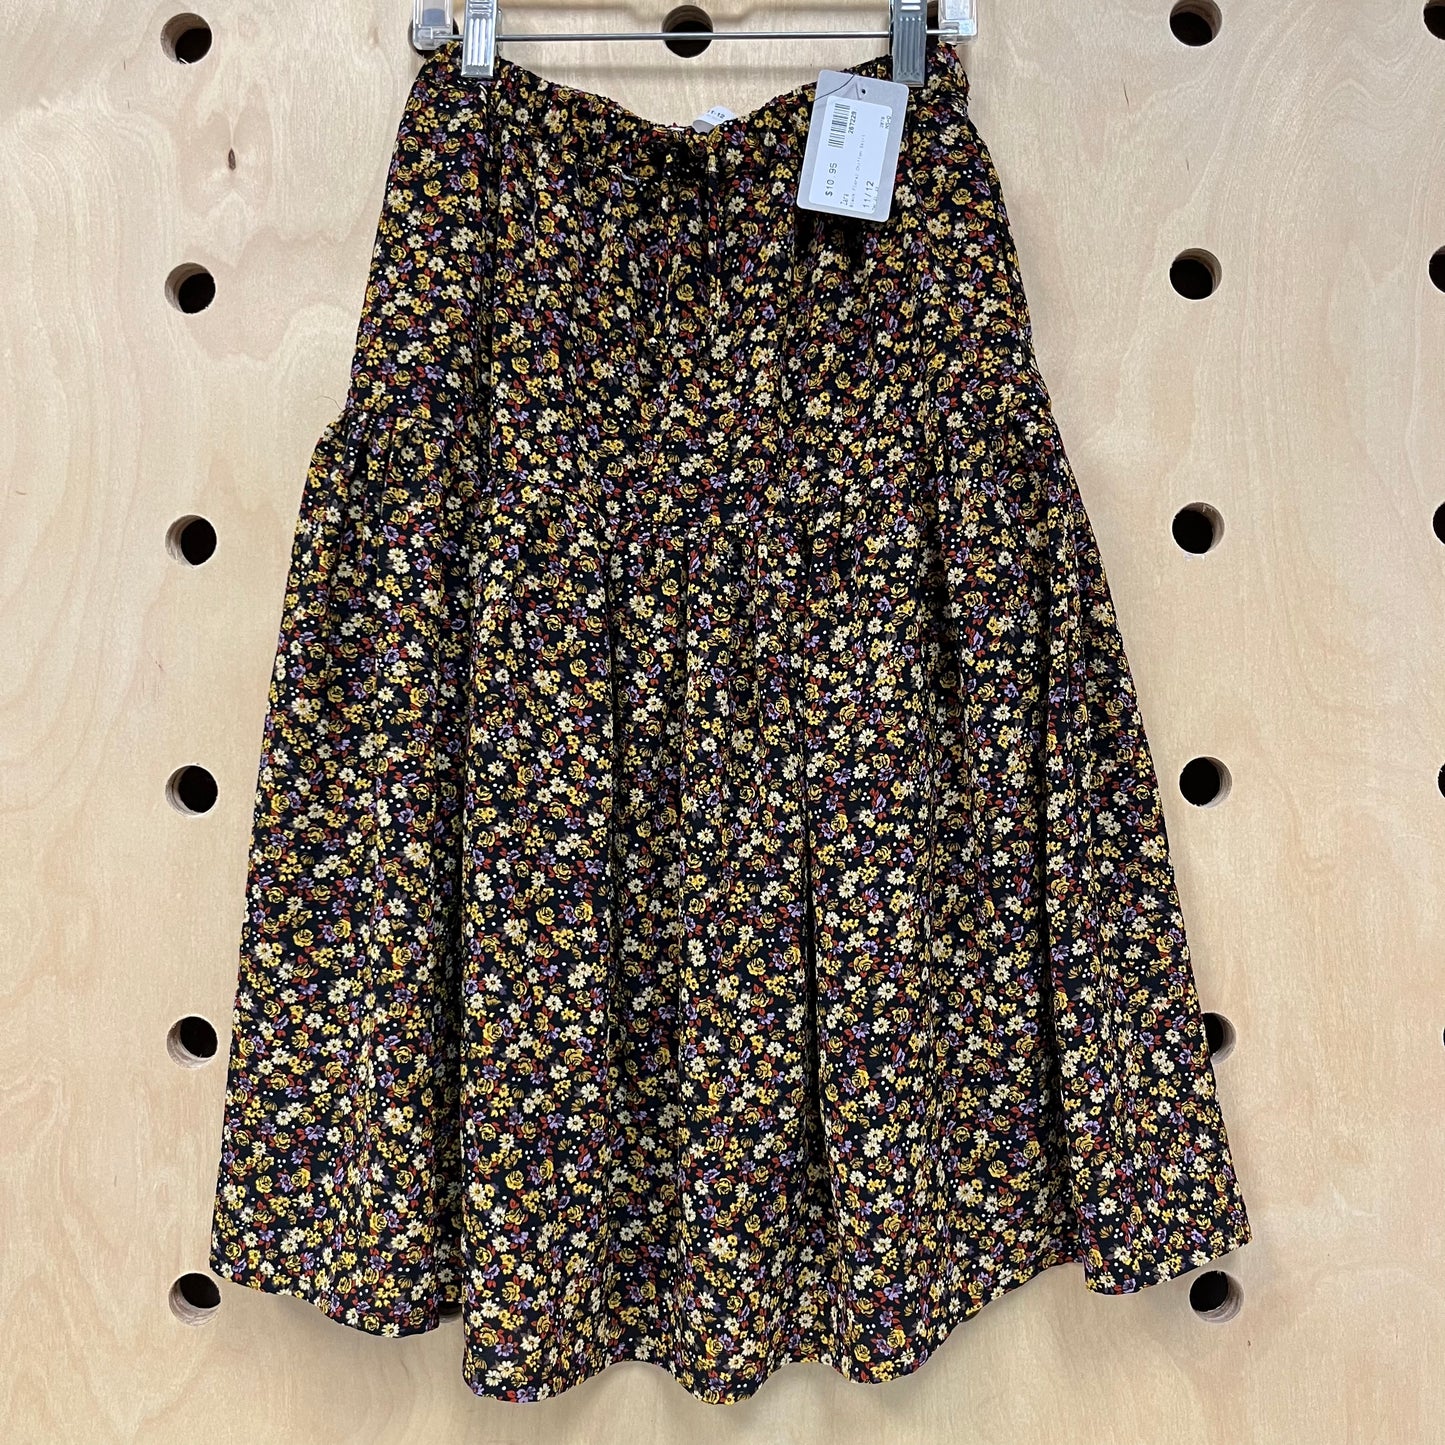 Black Floral Chiffon Skirt